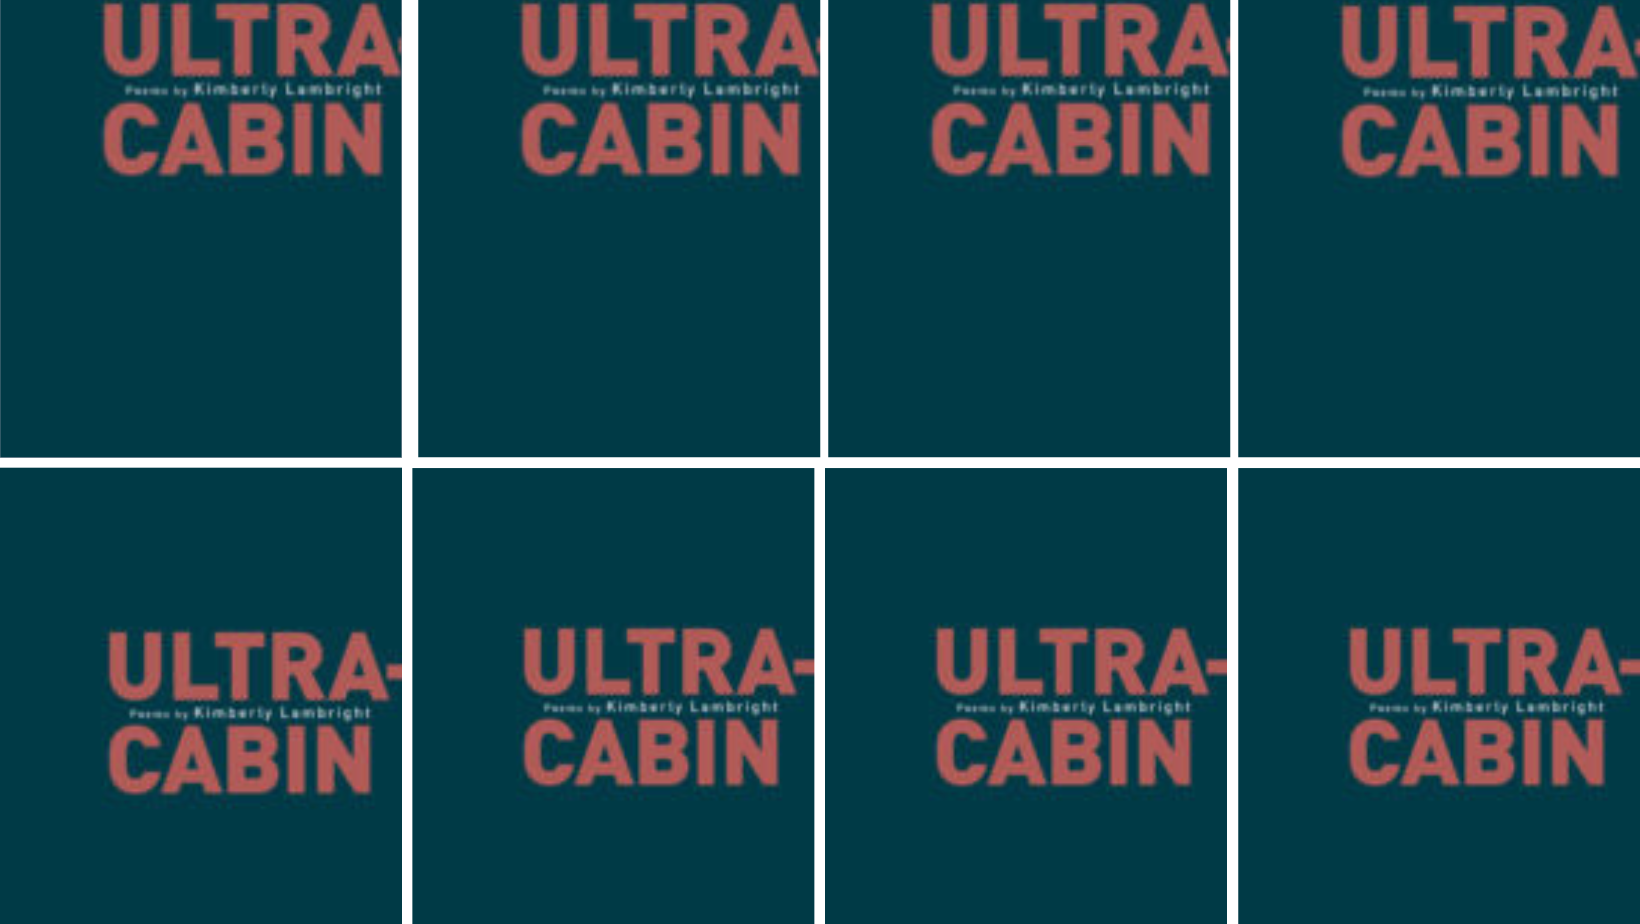 Ultra Cabin feature